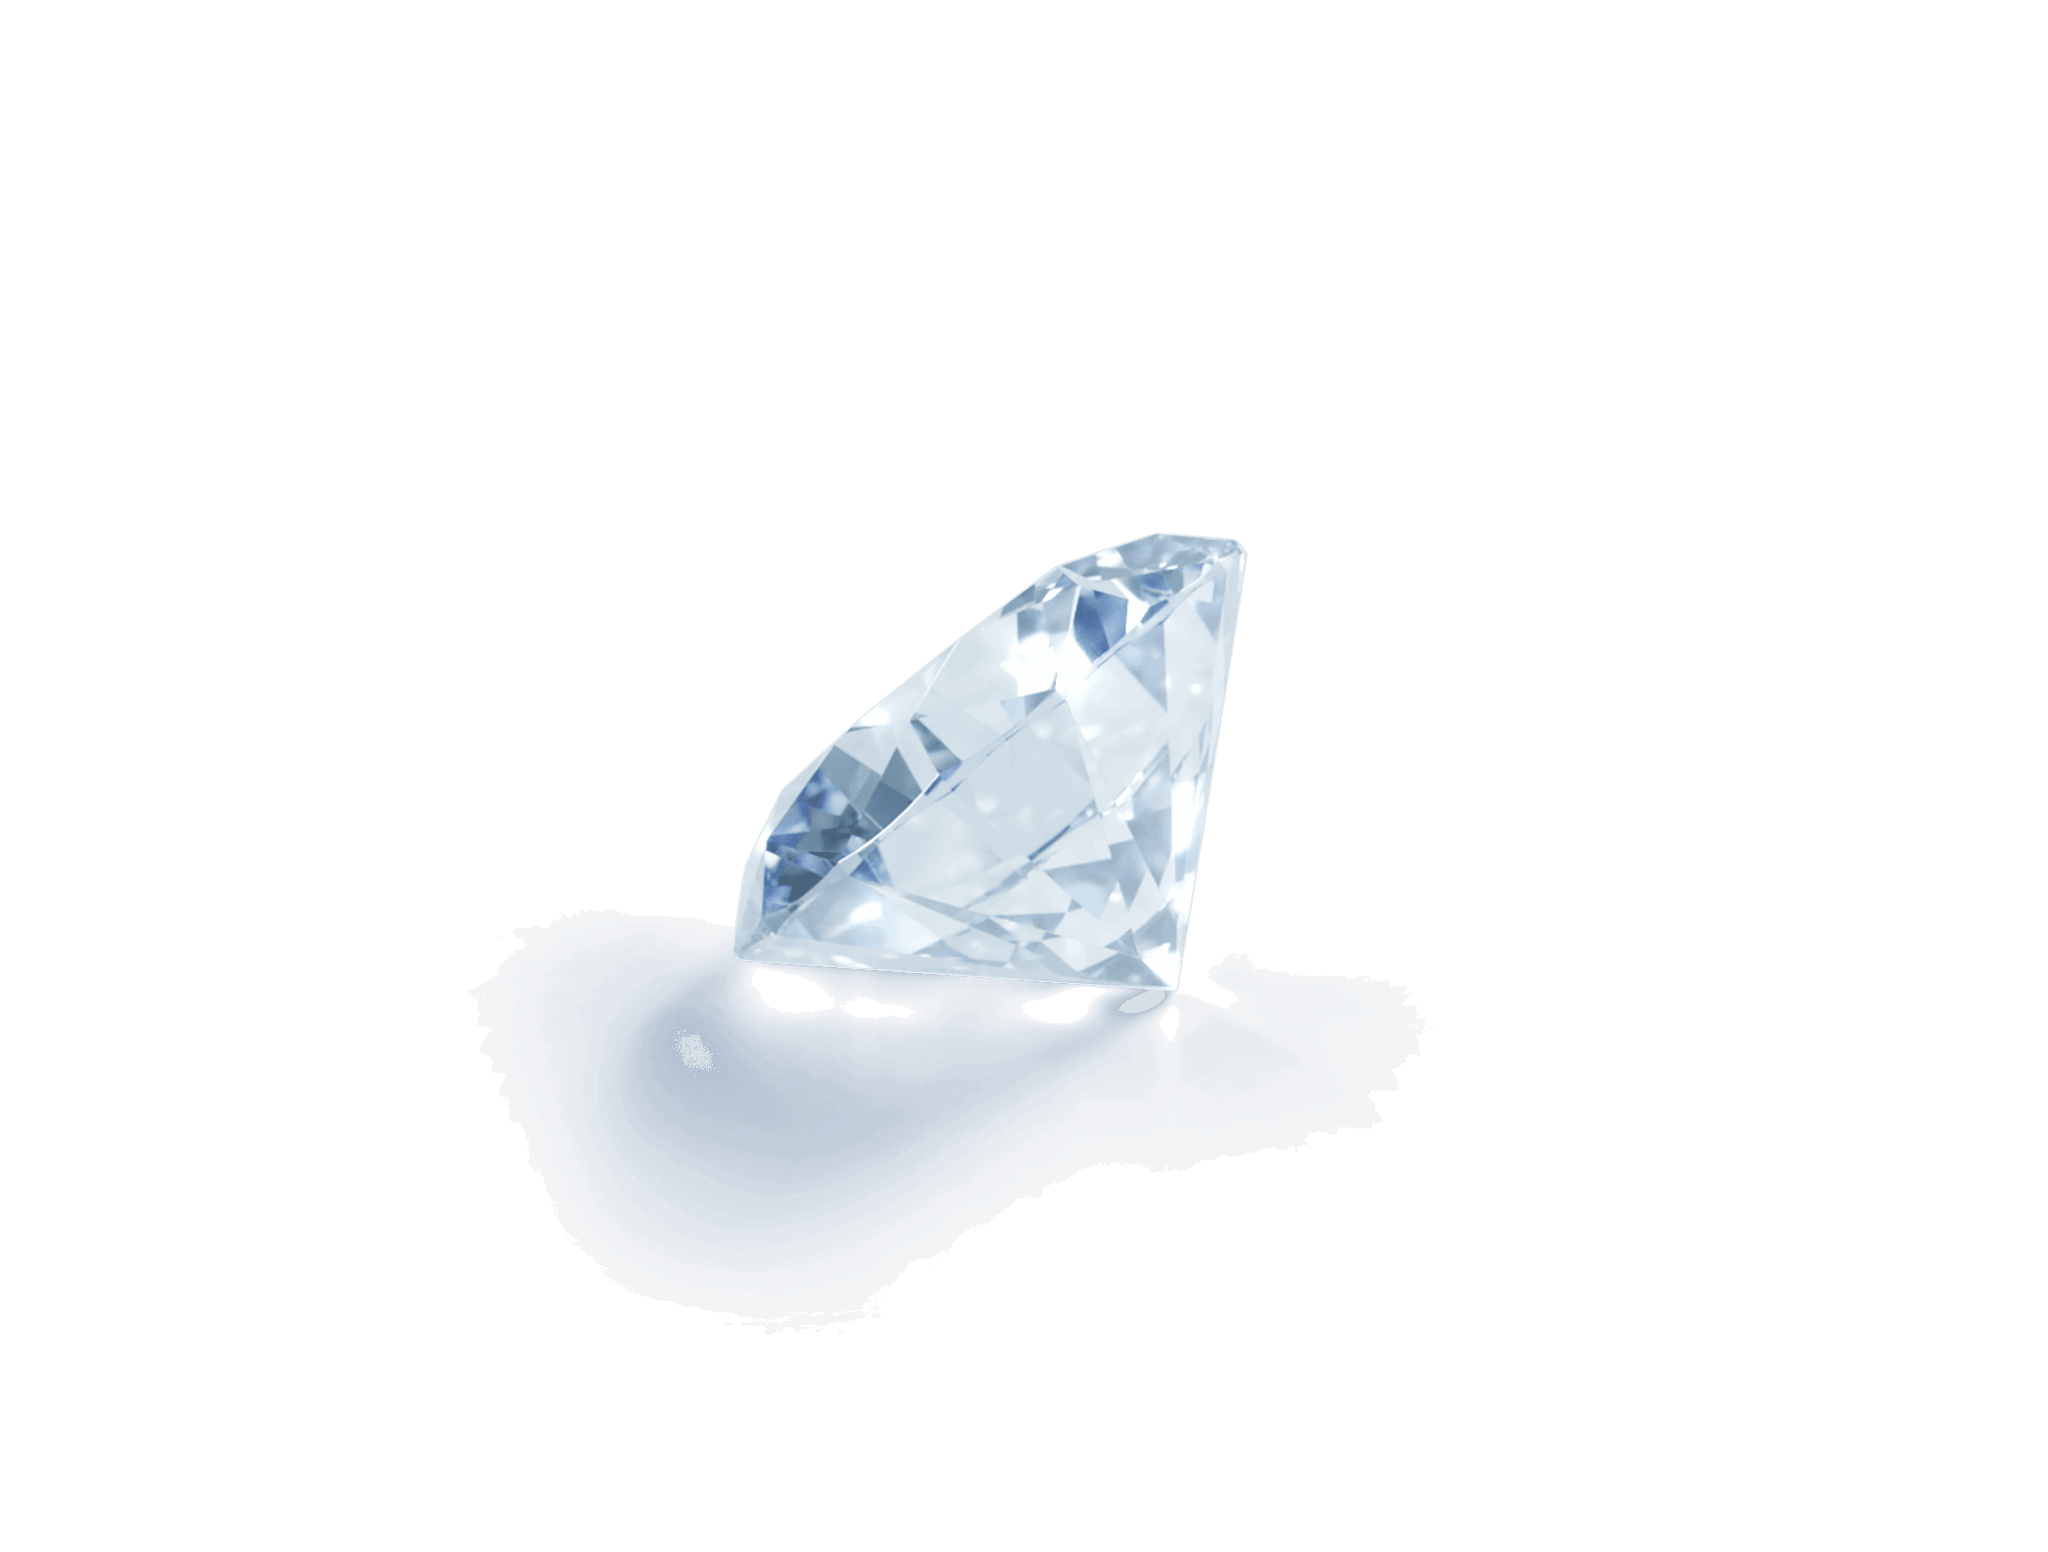 Lab-Grown Loose 2ct. Round Brilliant Diamond | Blue - #Lightbox Jewelry#